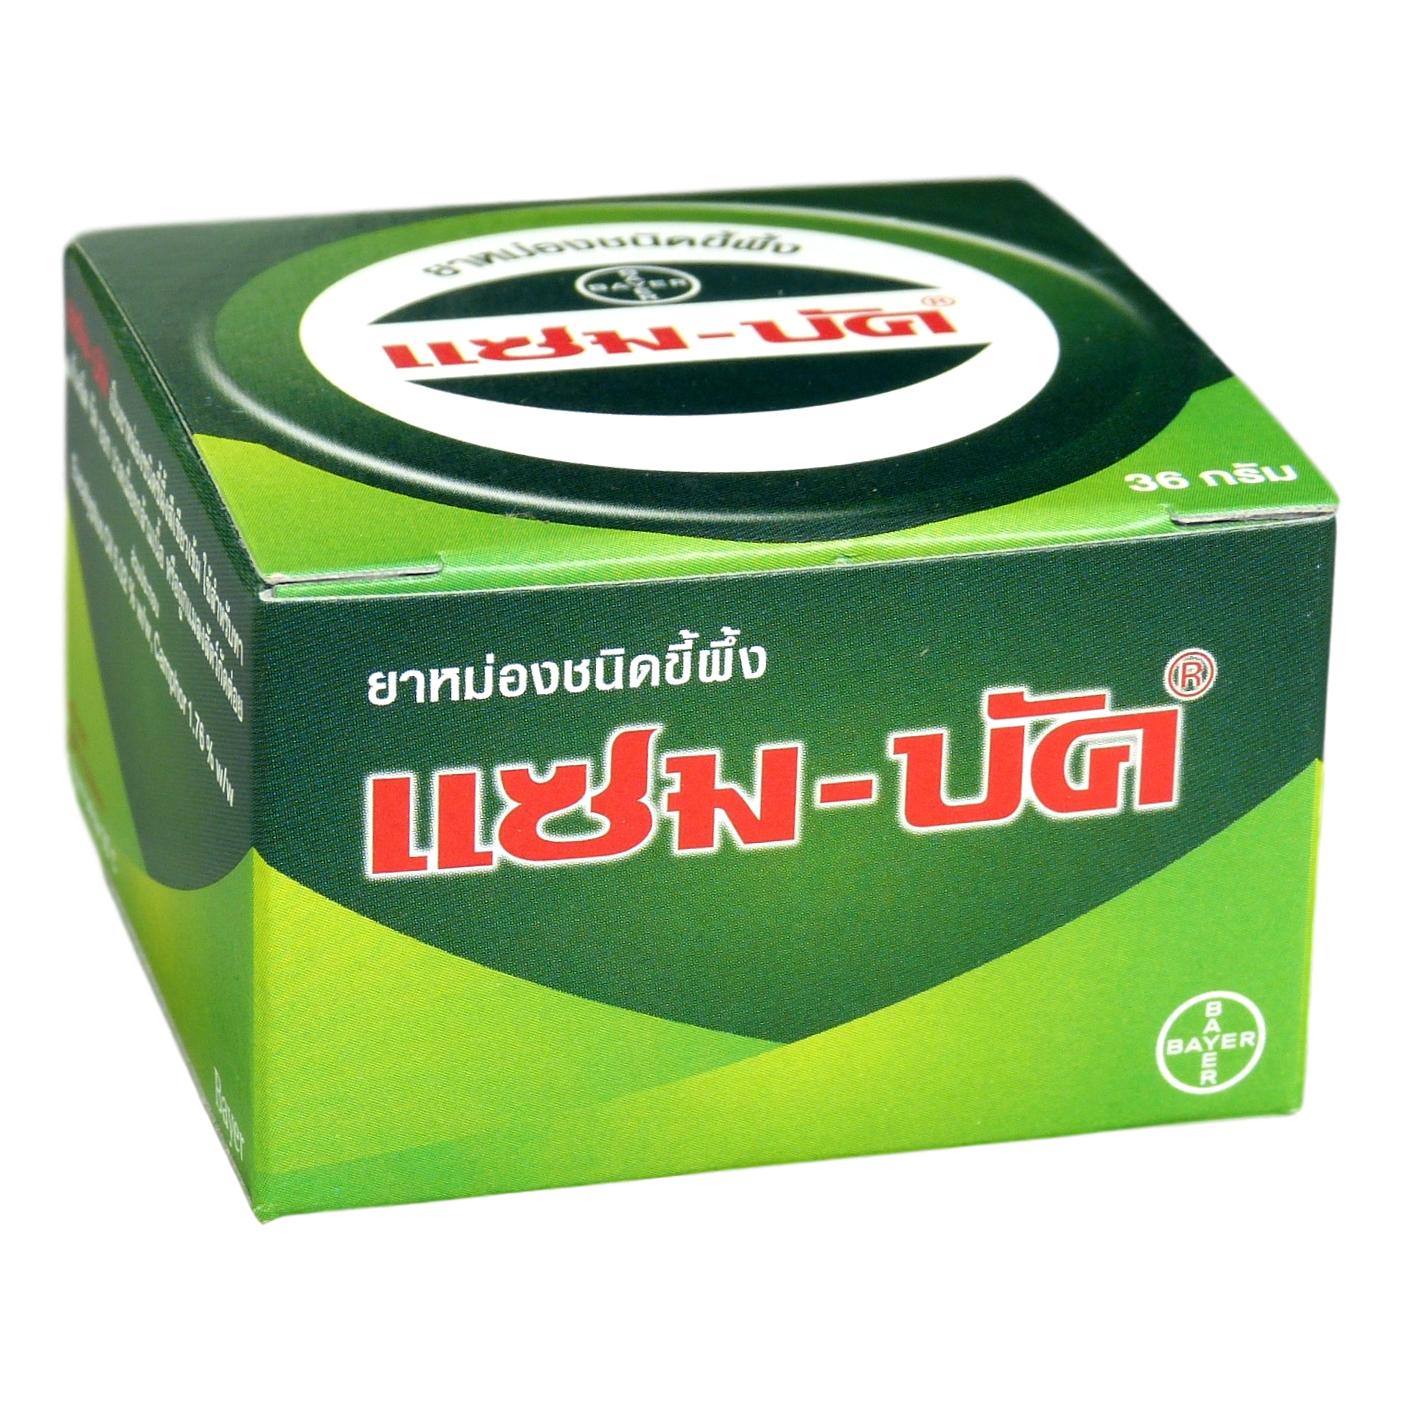 Zam Buk Medicated Herbal Ointment Balm 36 grams - Asian Beauty Supply